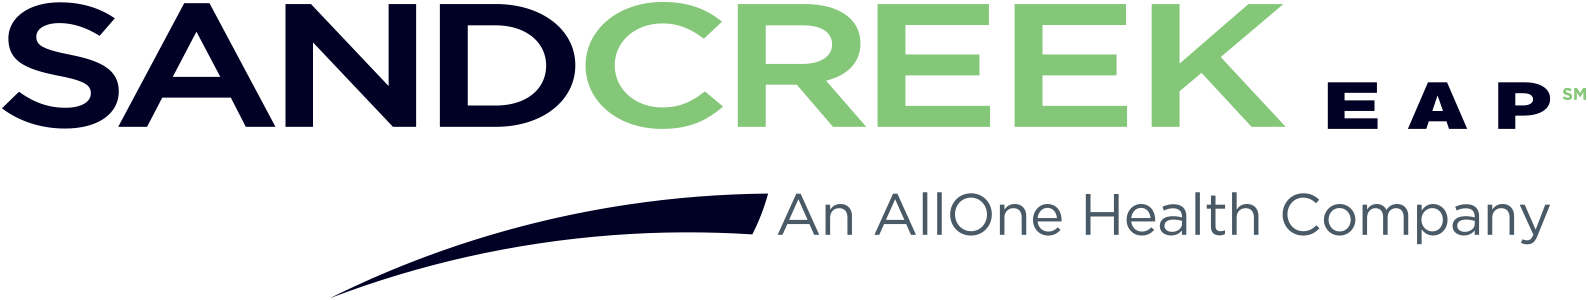 Sand Creek, An AllOne Health Company